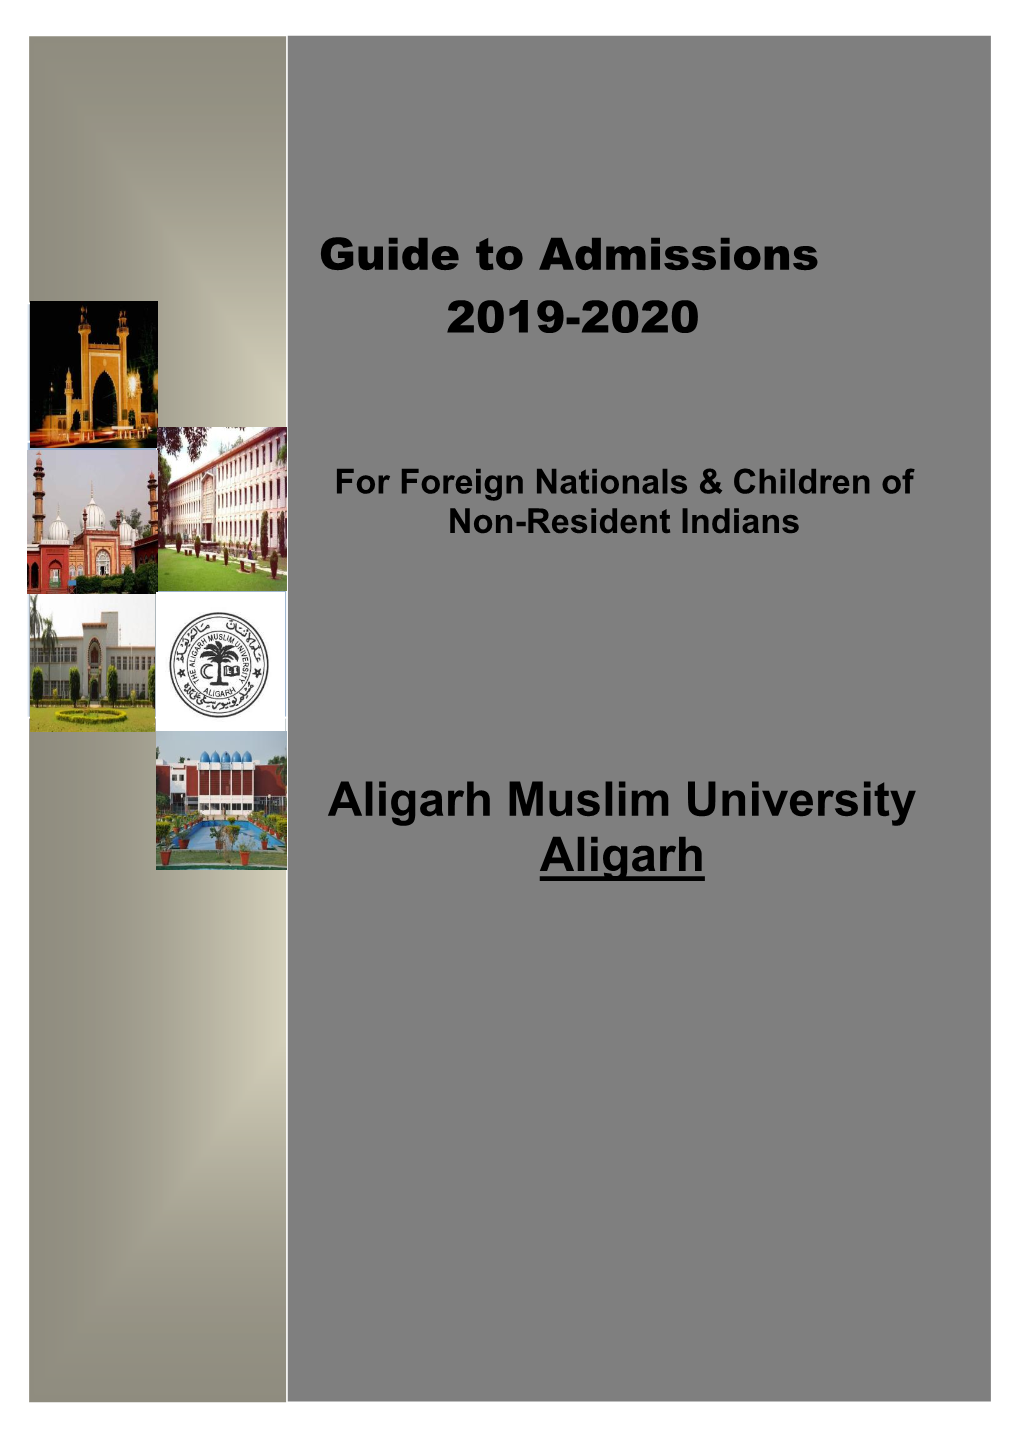 Aligarh Muslim University Aligarh